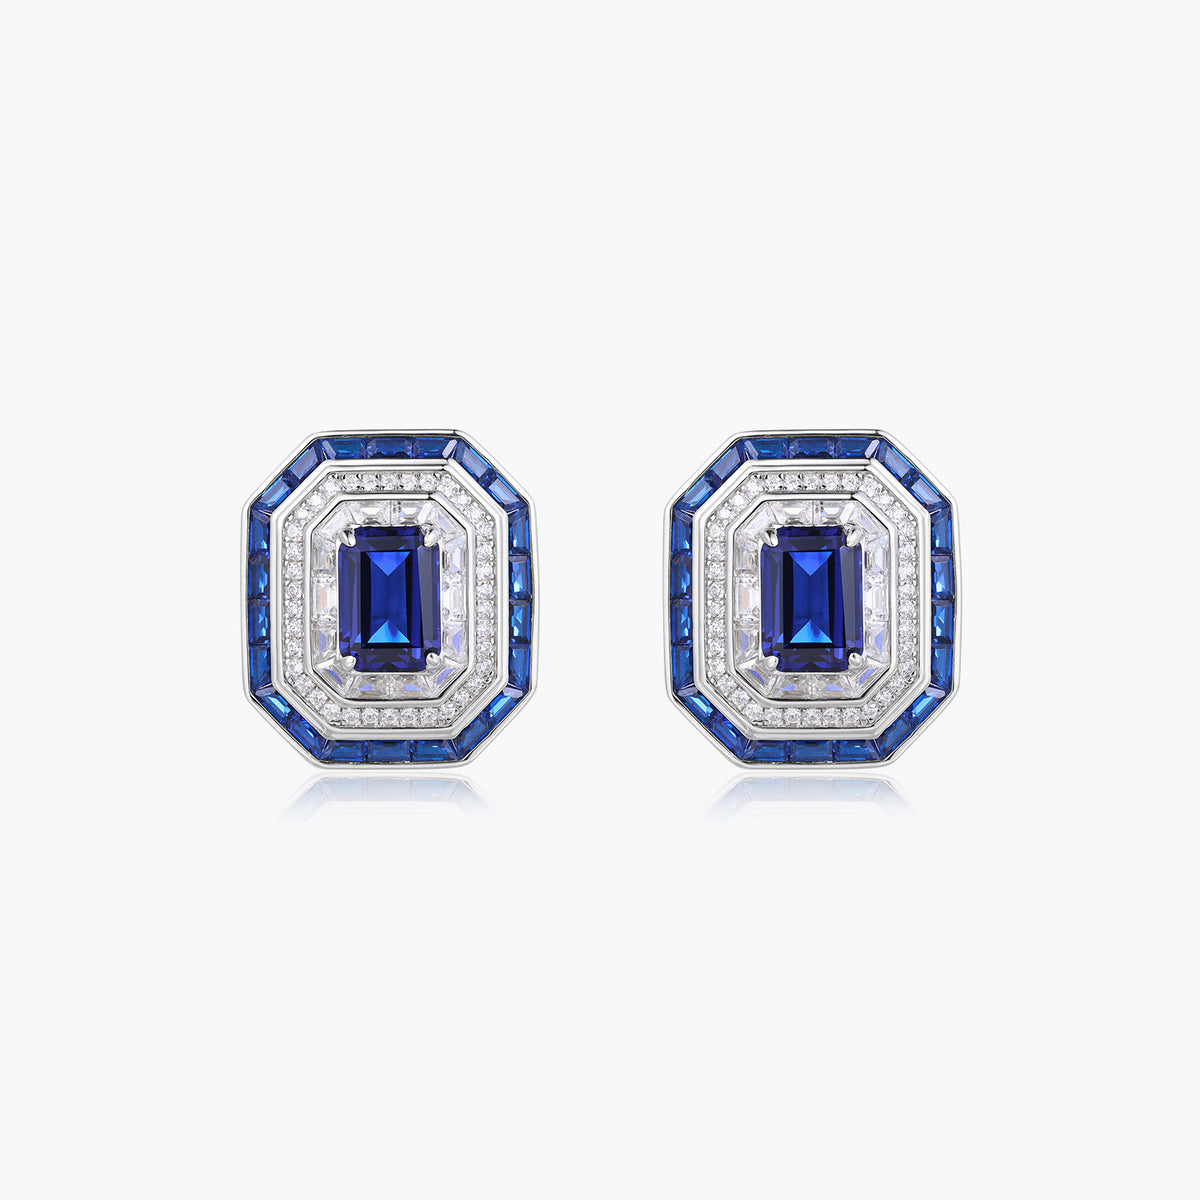 Dissoo® Geometric Art Deco Emerald Cut Sapphire Blue Earrings